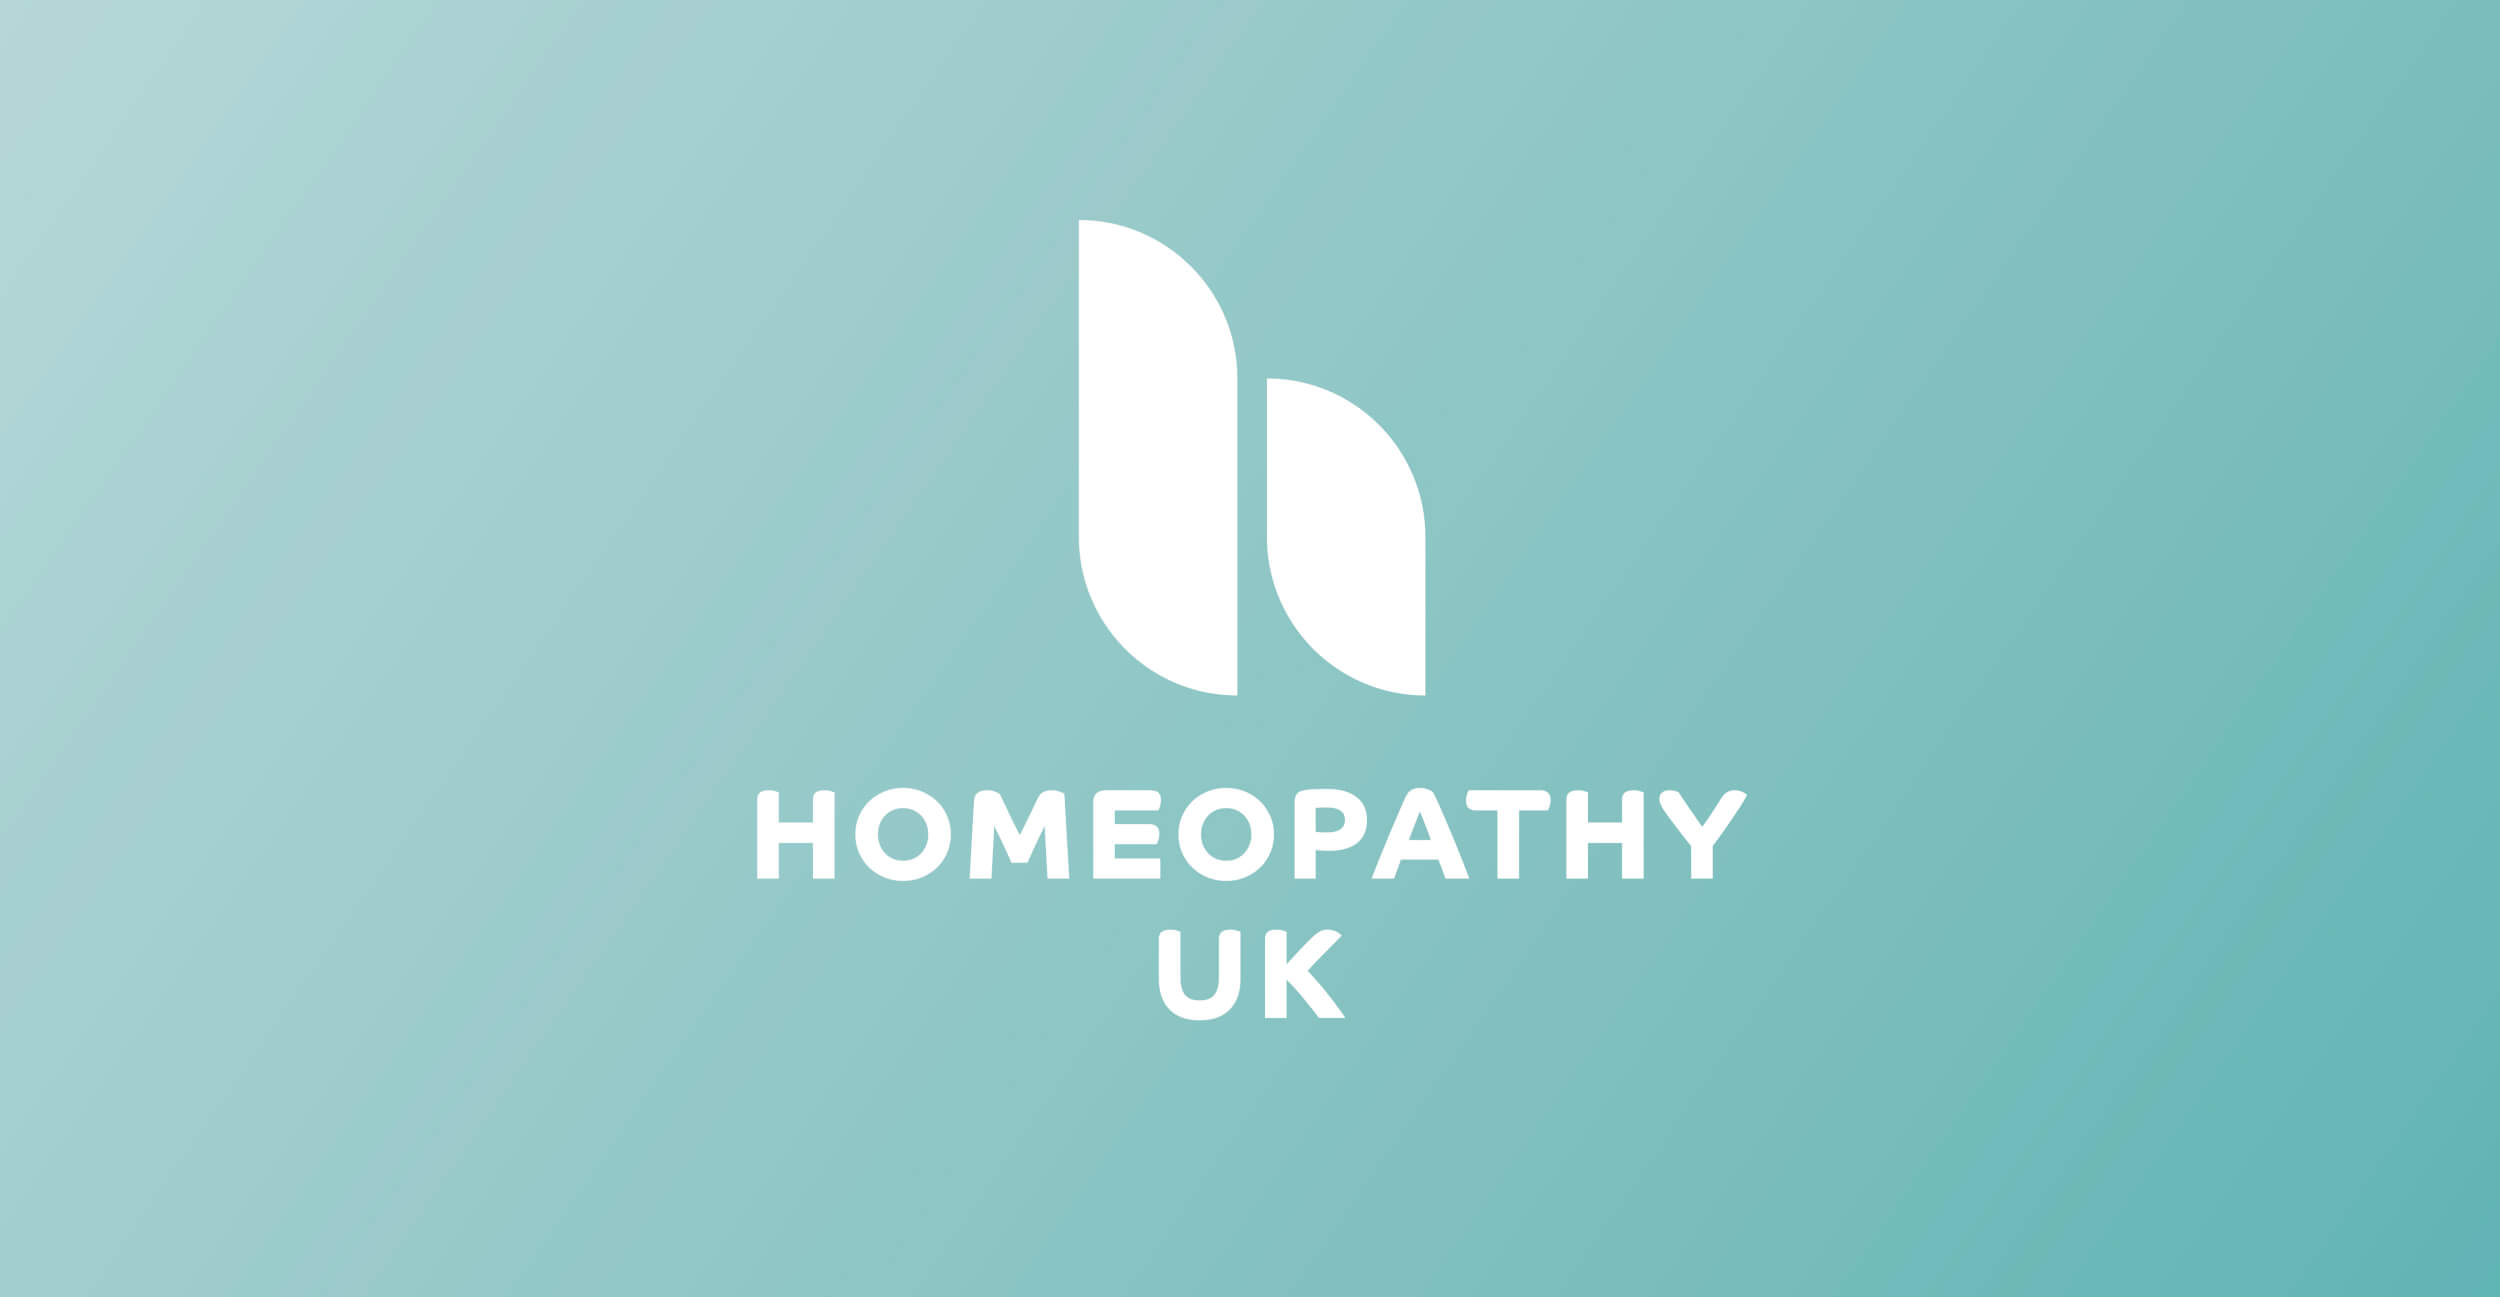 Homeopathy UK new identity